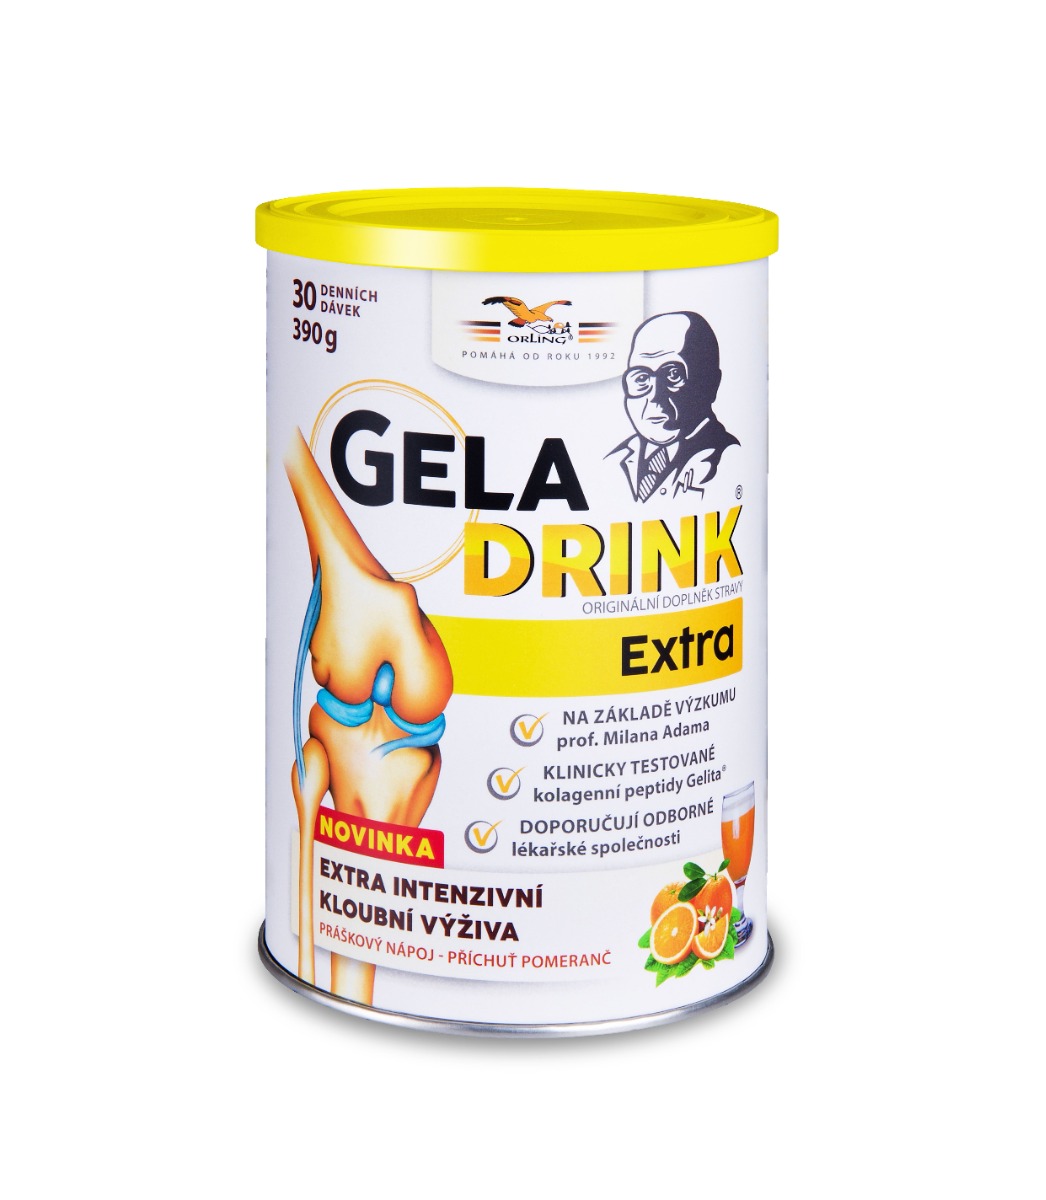 Geladrink Extra pomeranč práškový nápoj 390 g Geladrink